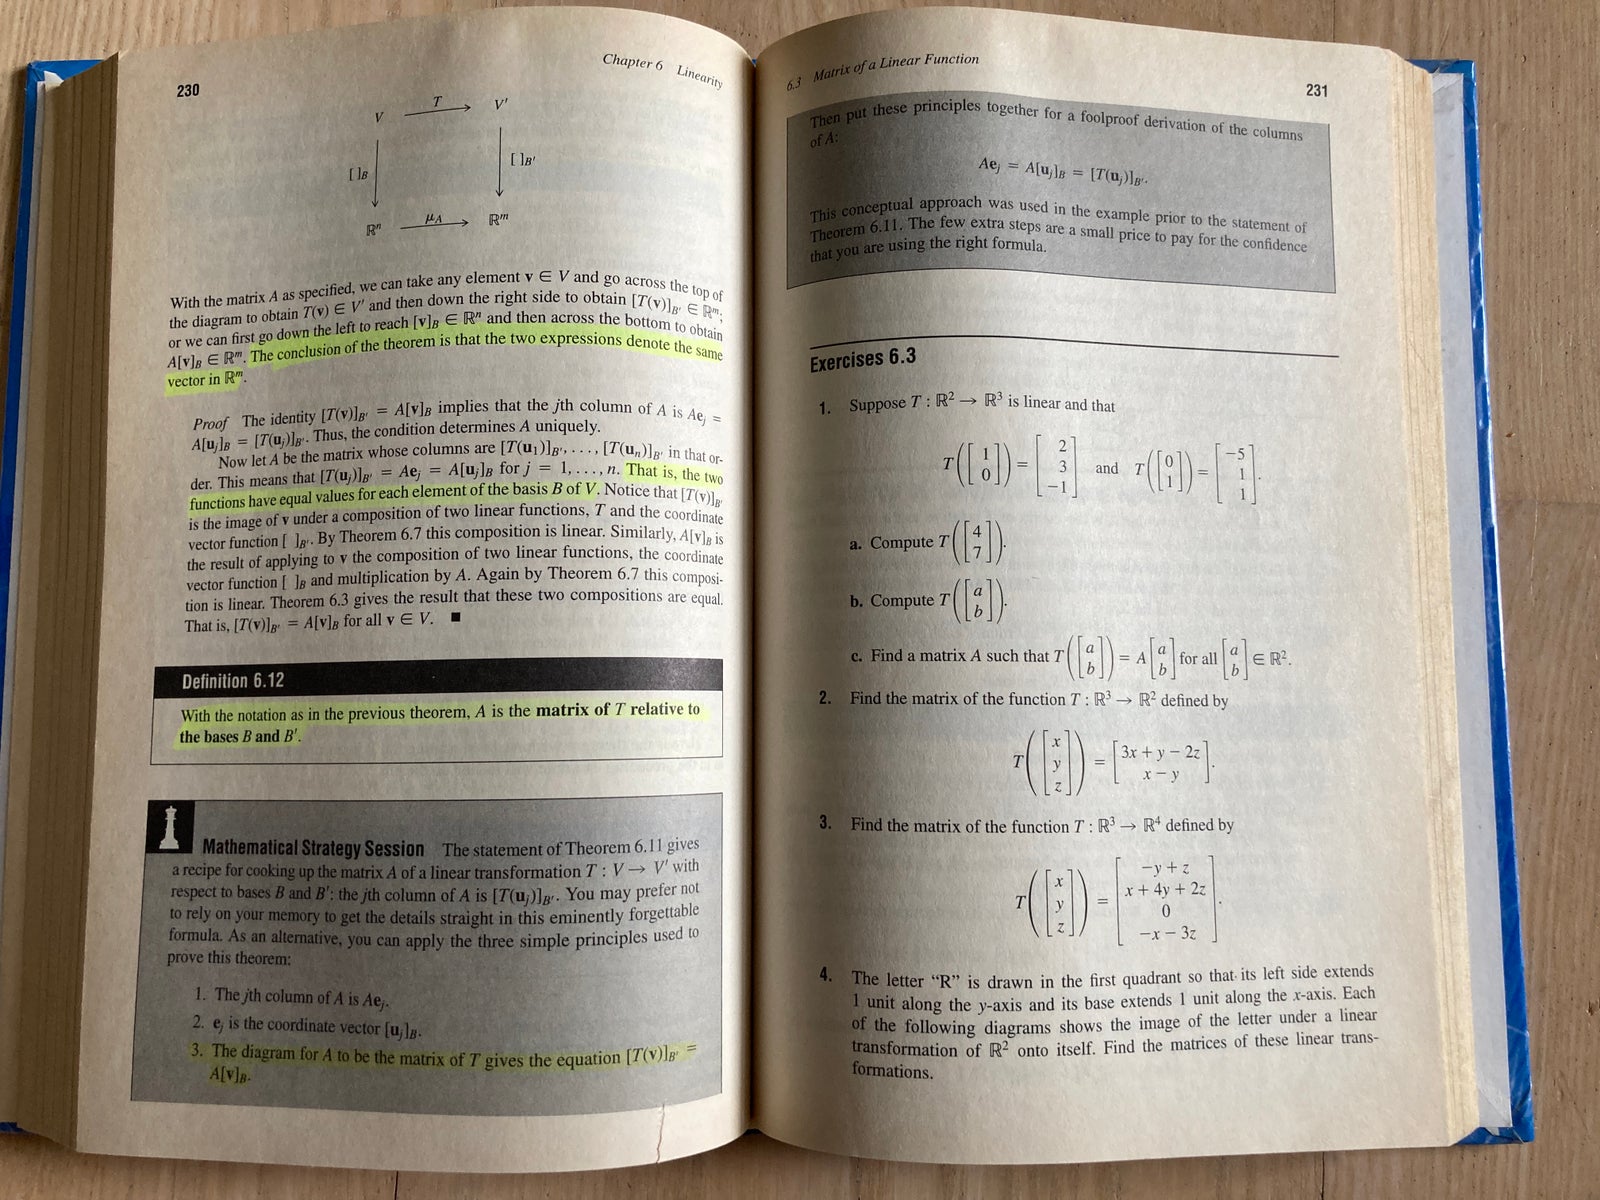 Linear Algebra, Robert Messer, år 1994